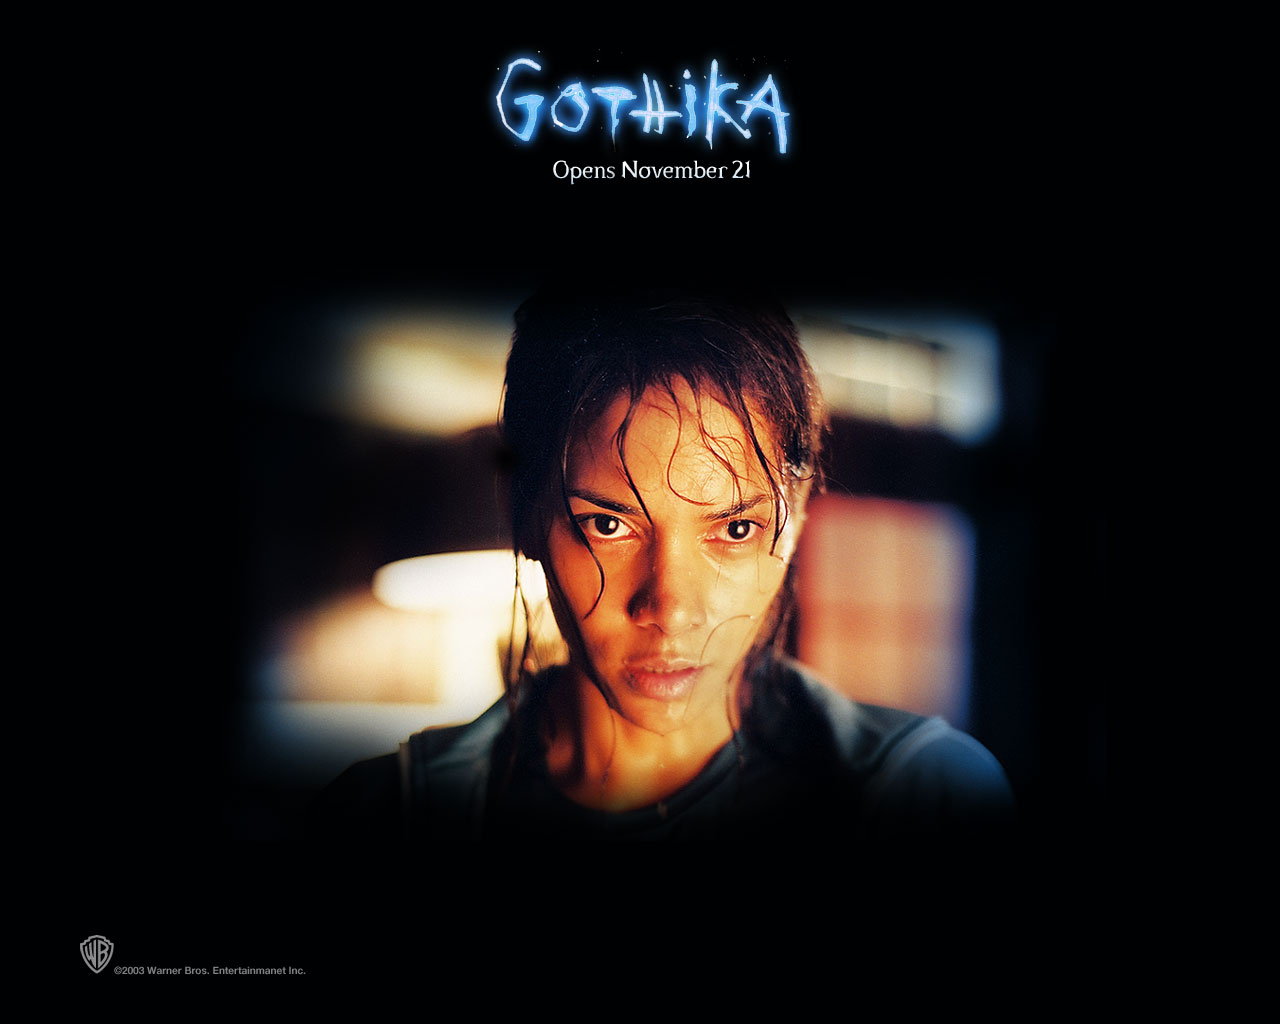 Download High quality Gothika wallpaper / Movies / 1280x1024